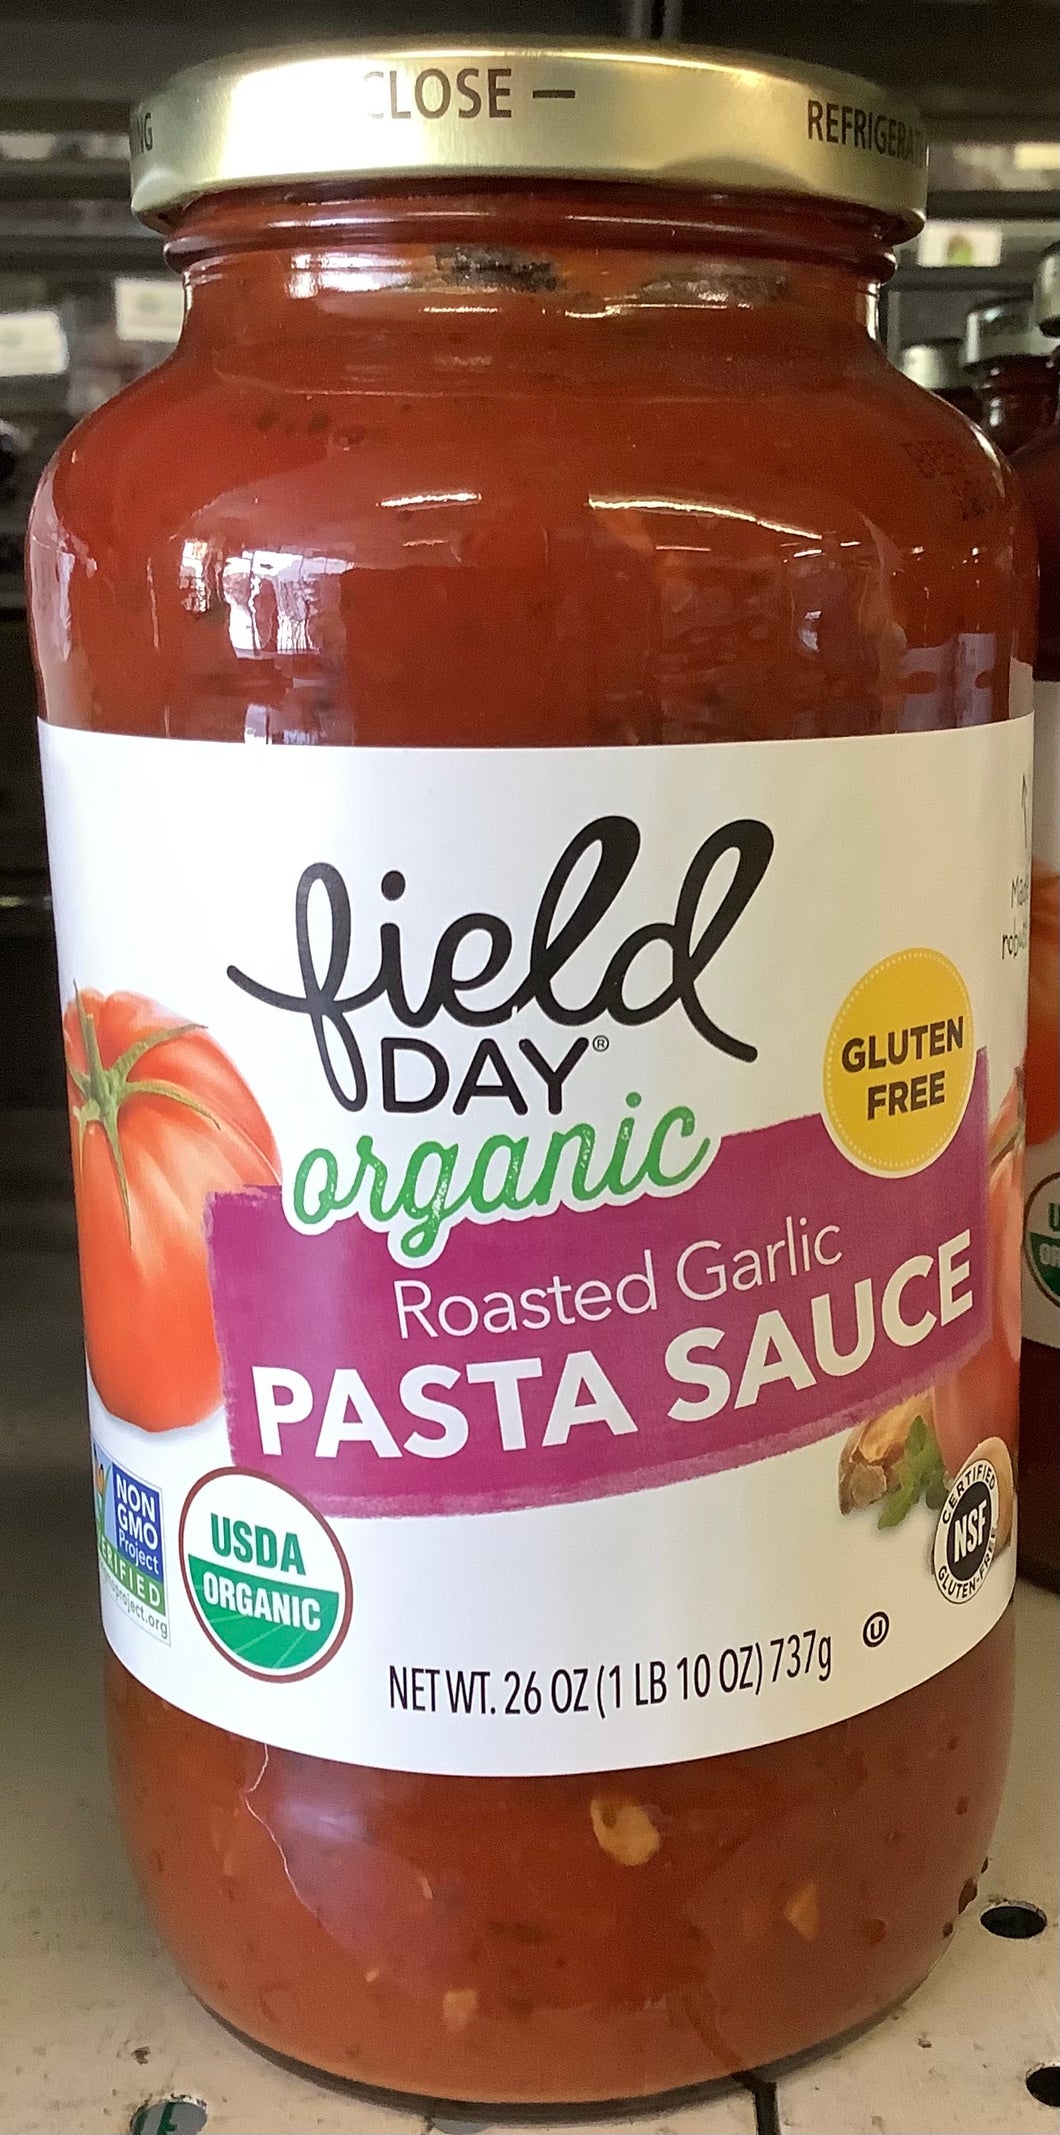 Tomato Sauce, Roasted Garlic, Field Day, Organic